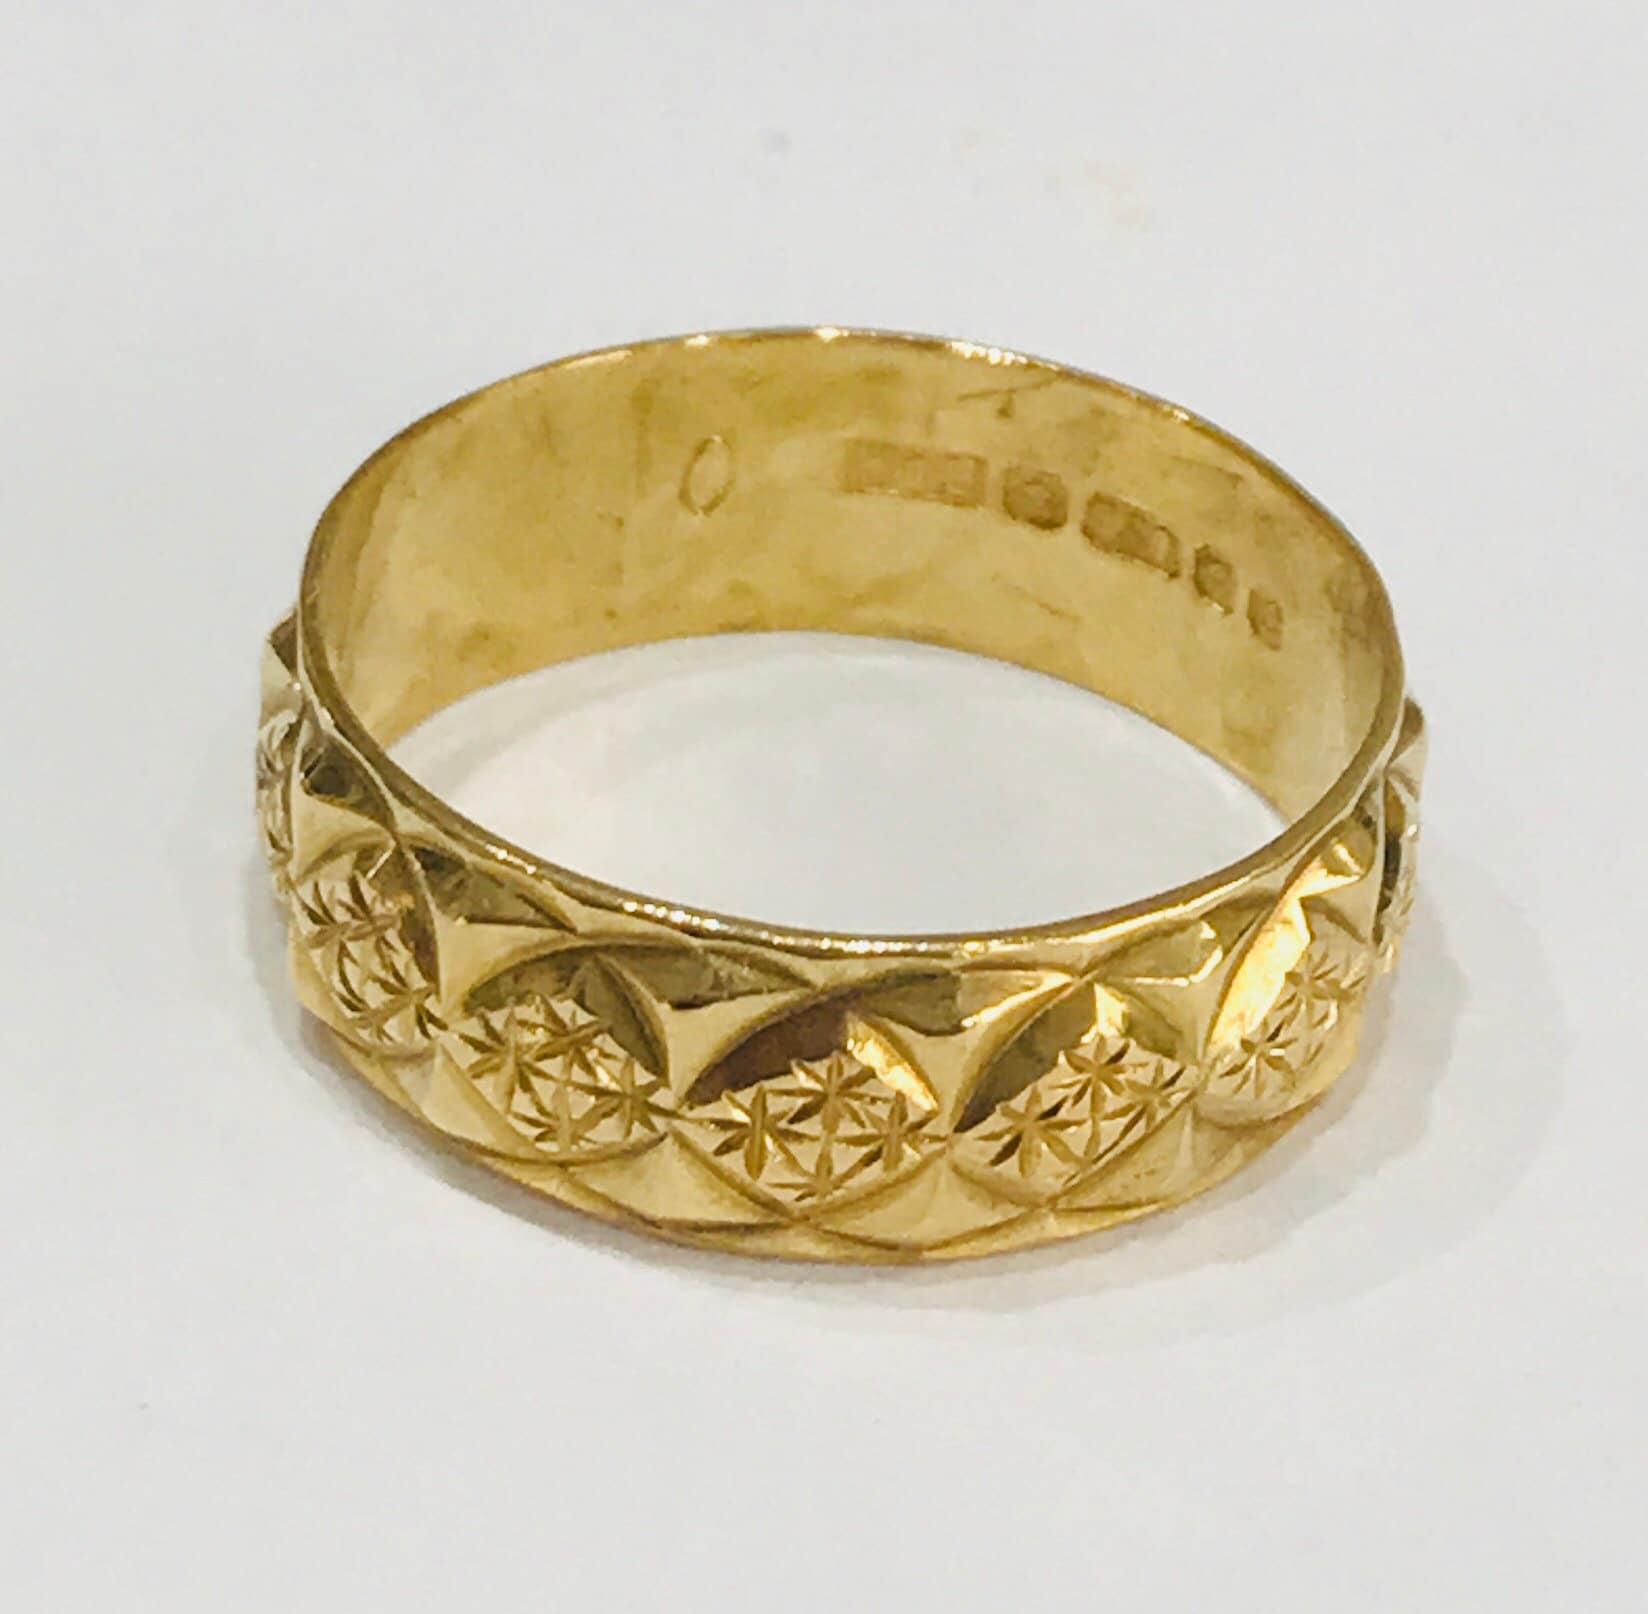 Stunning patterned vintage  18ct yellow  gold  wedding  ring  